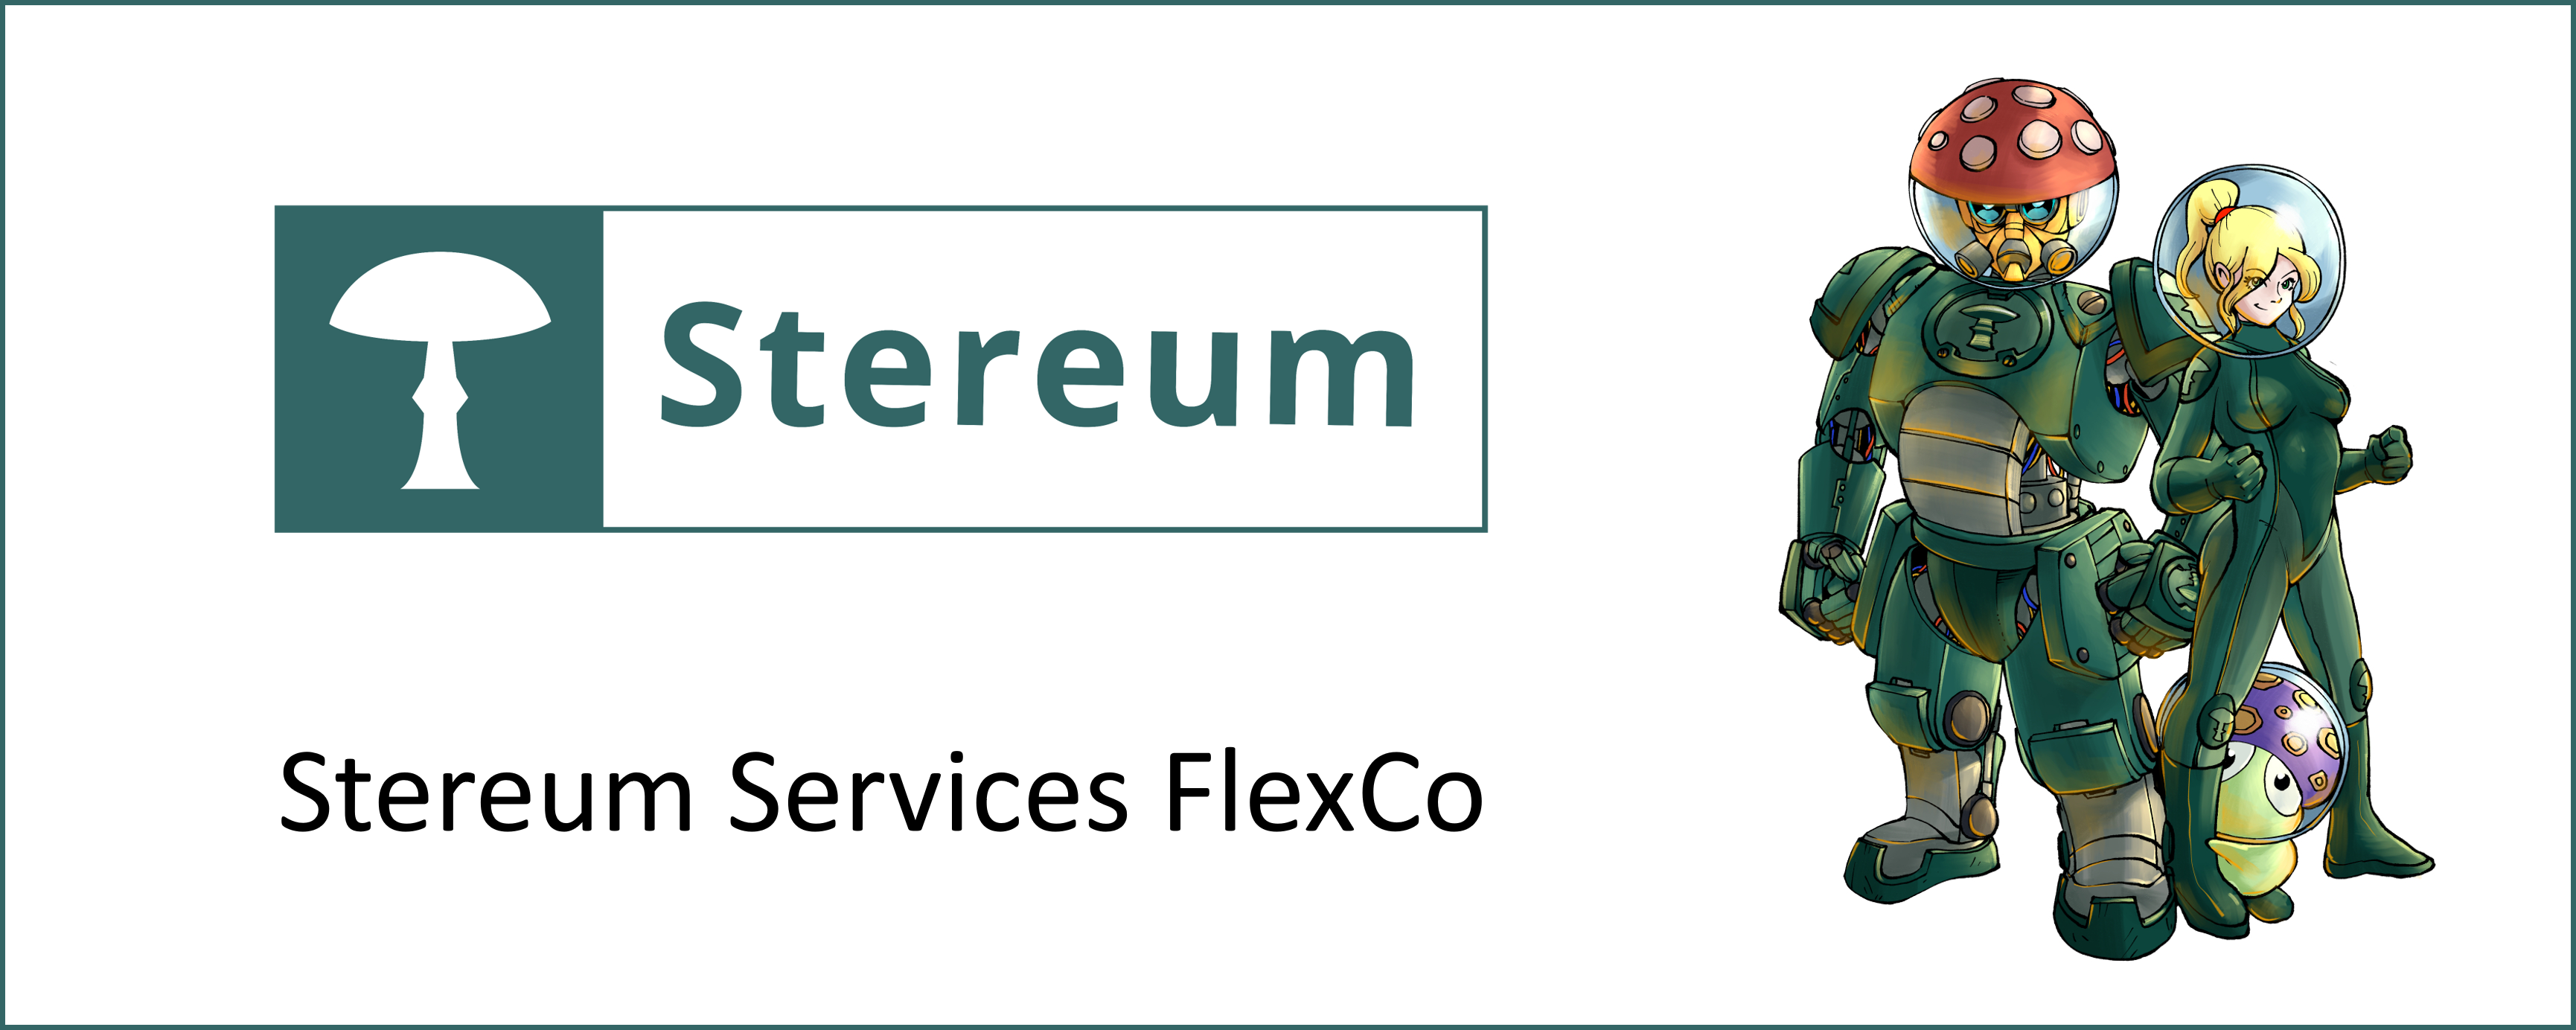 NEW Company Stereum Services FlexCo